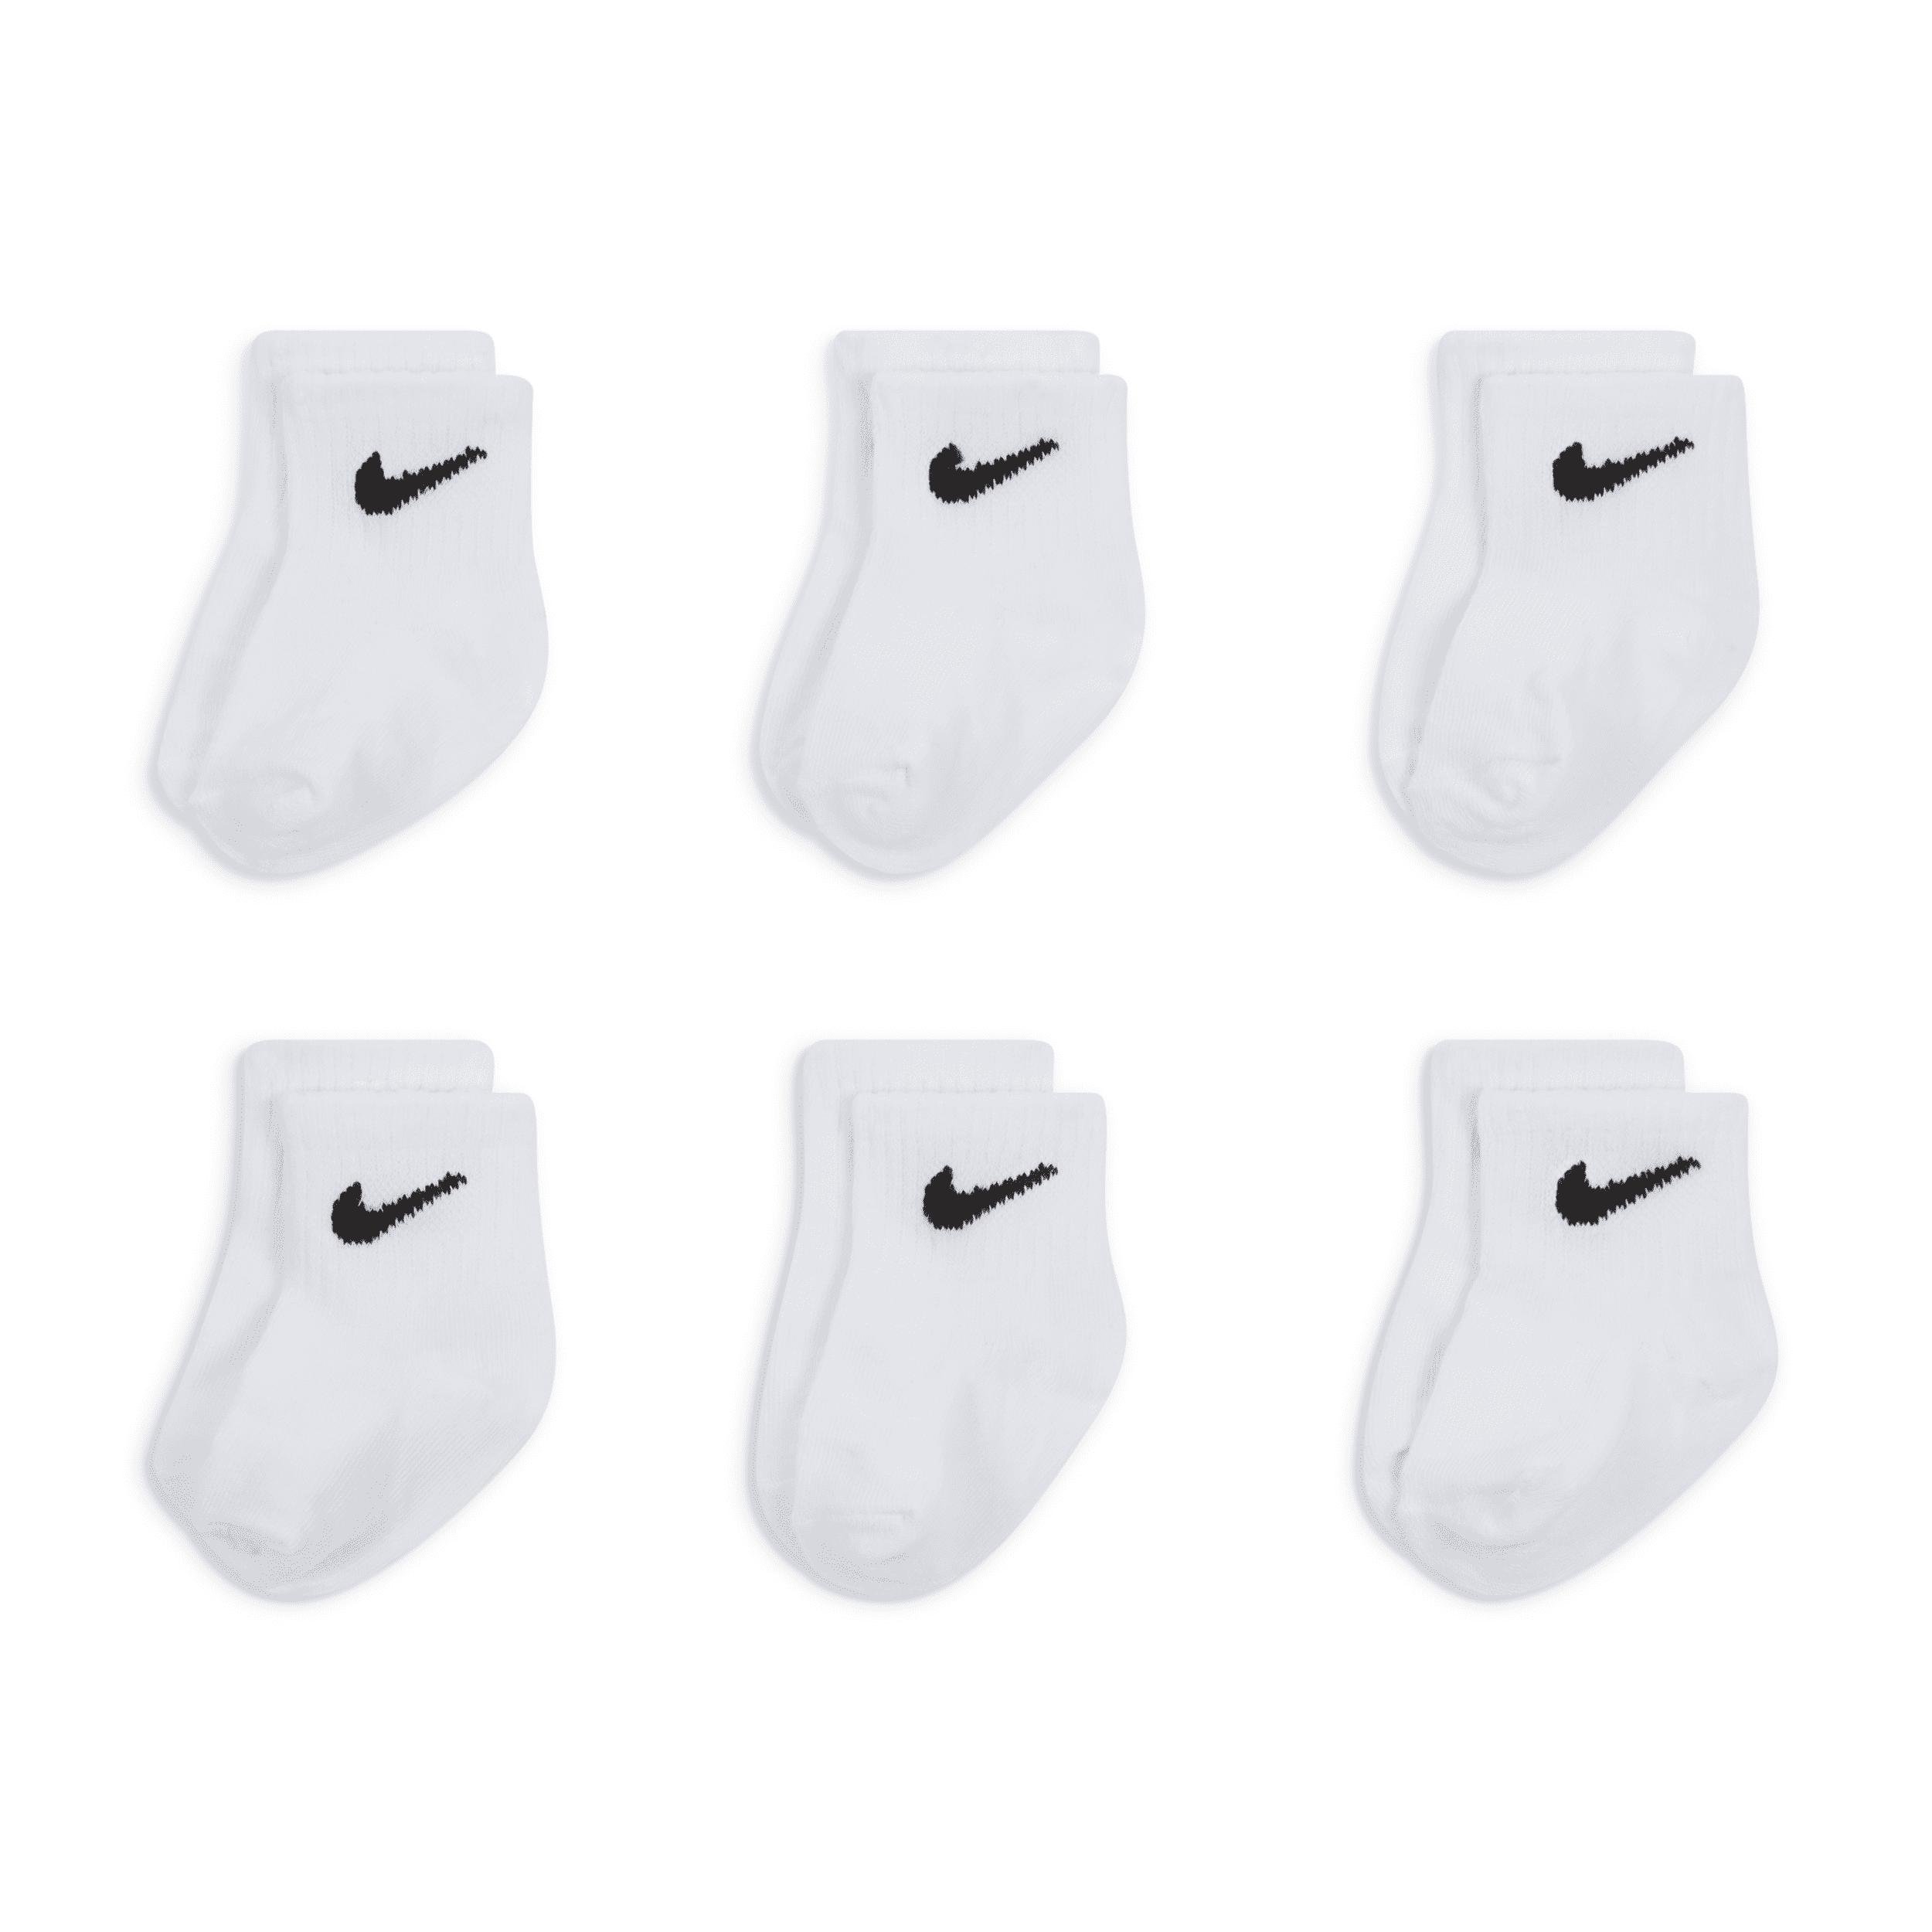 Nike Logo Ankle Socks Box Set (6 Pairs) Baby Socks by NIKE